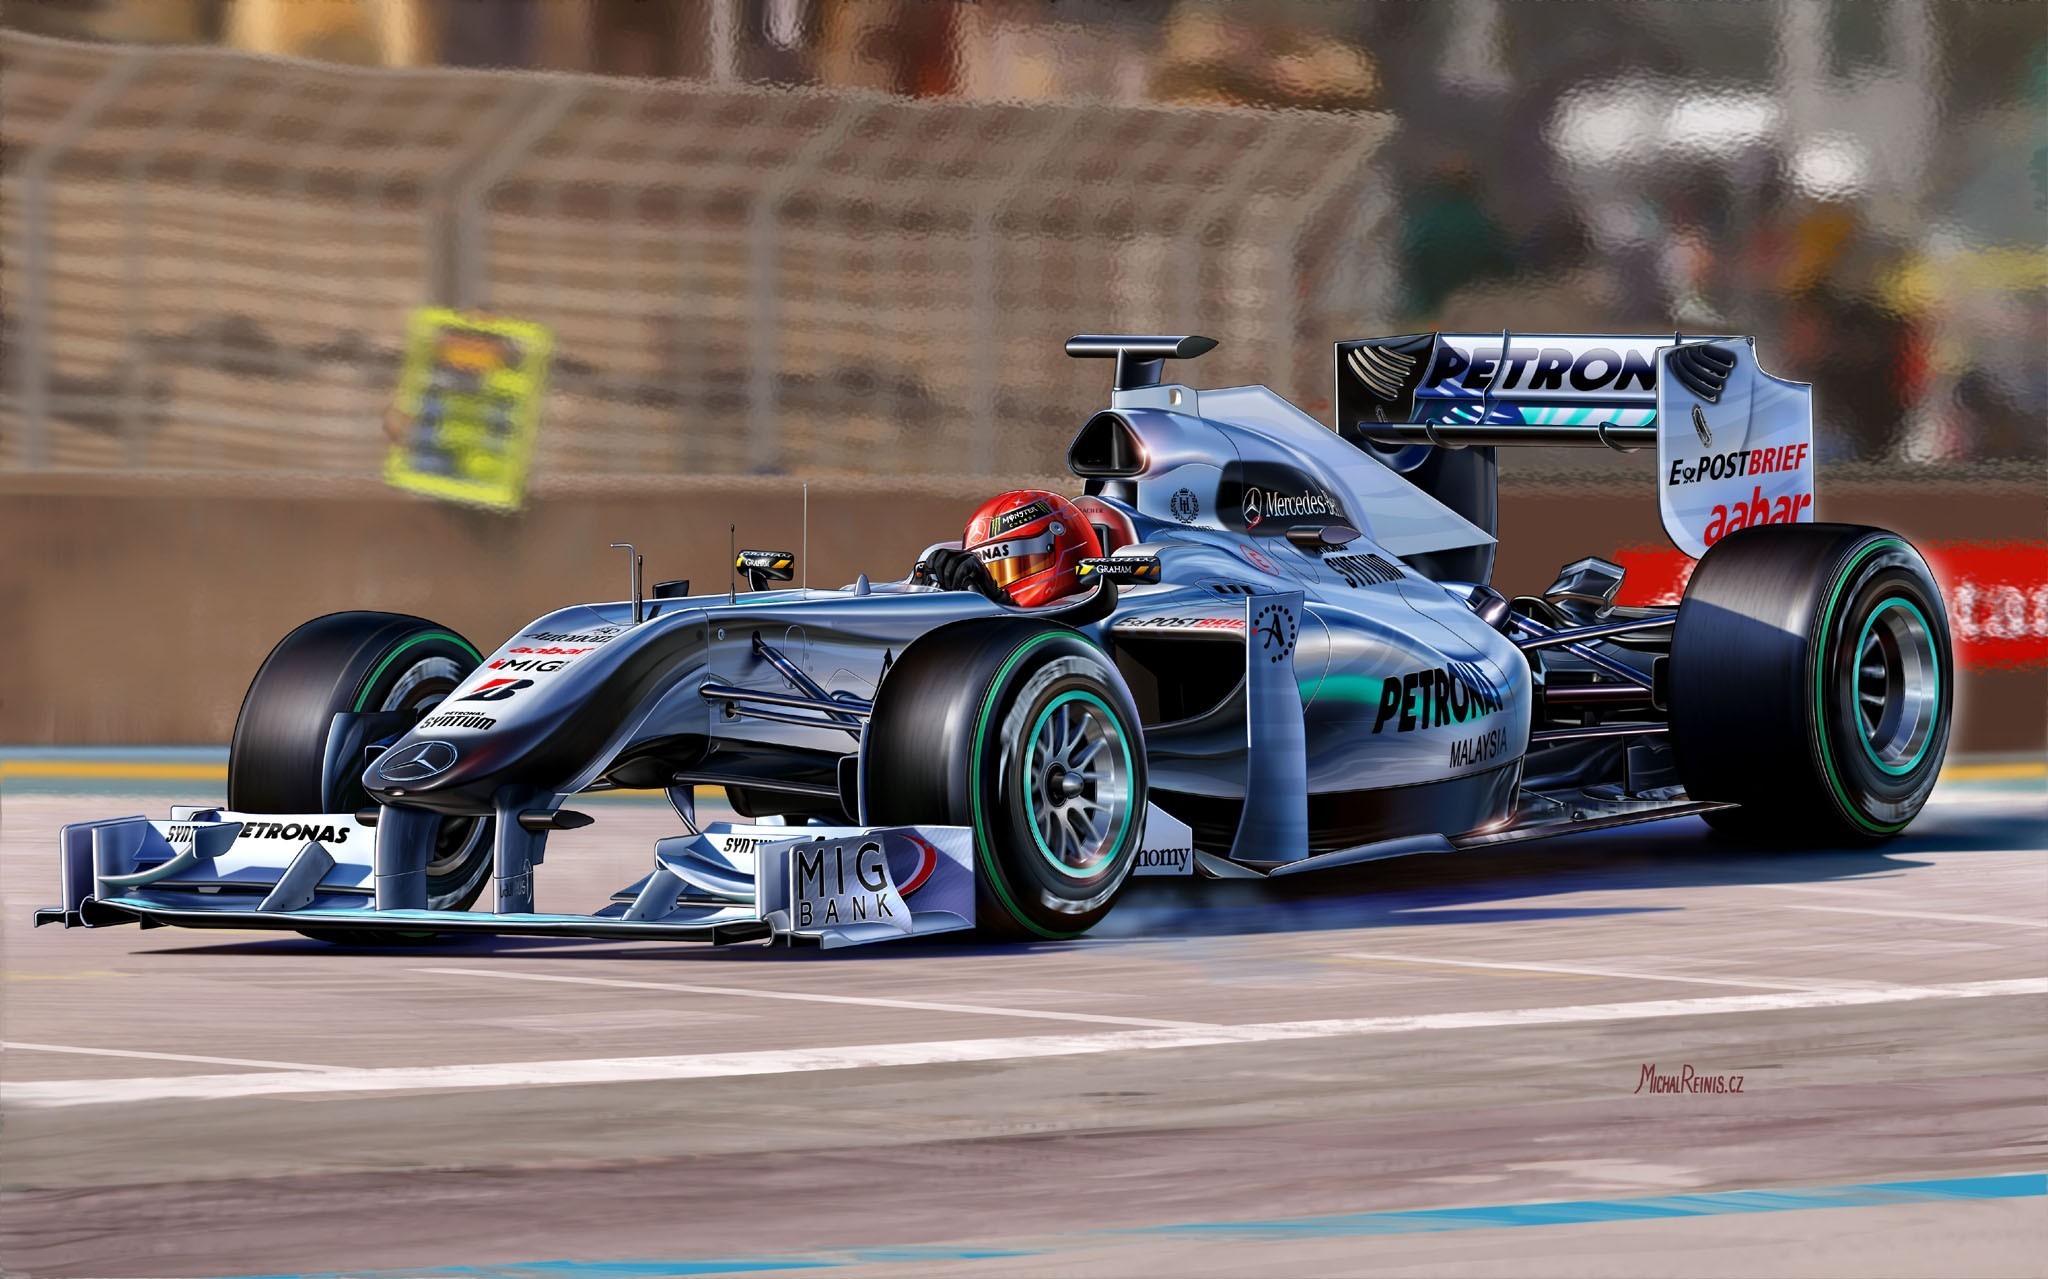 Gp W01 Racing Formula Driver Michael Schumacher Wallpaper